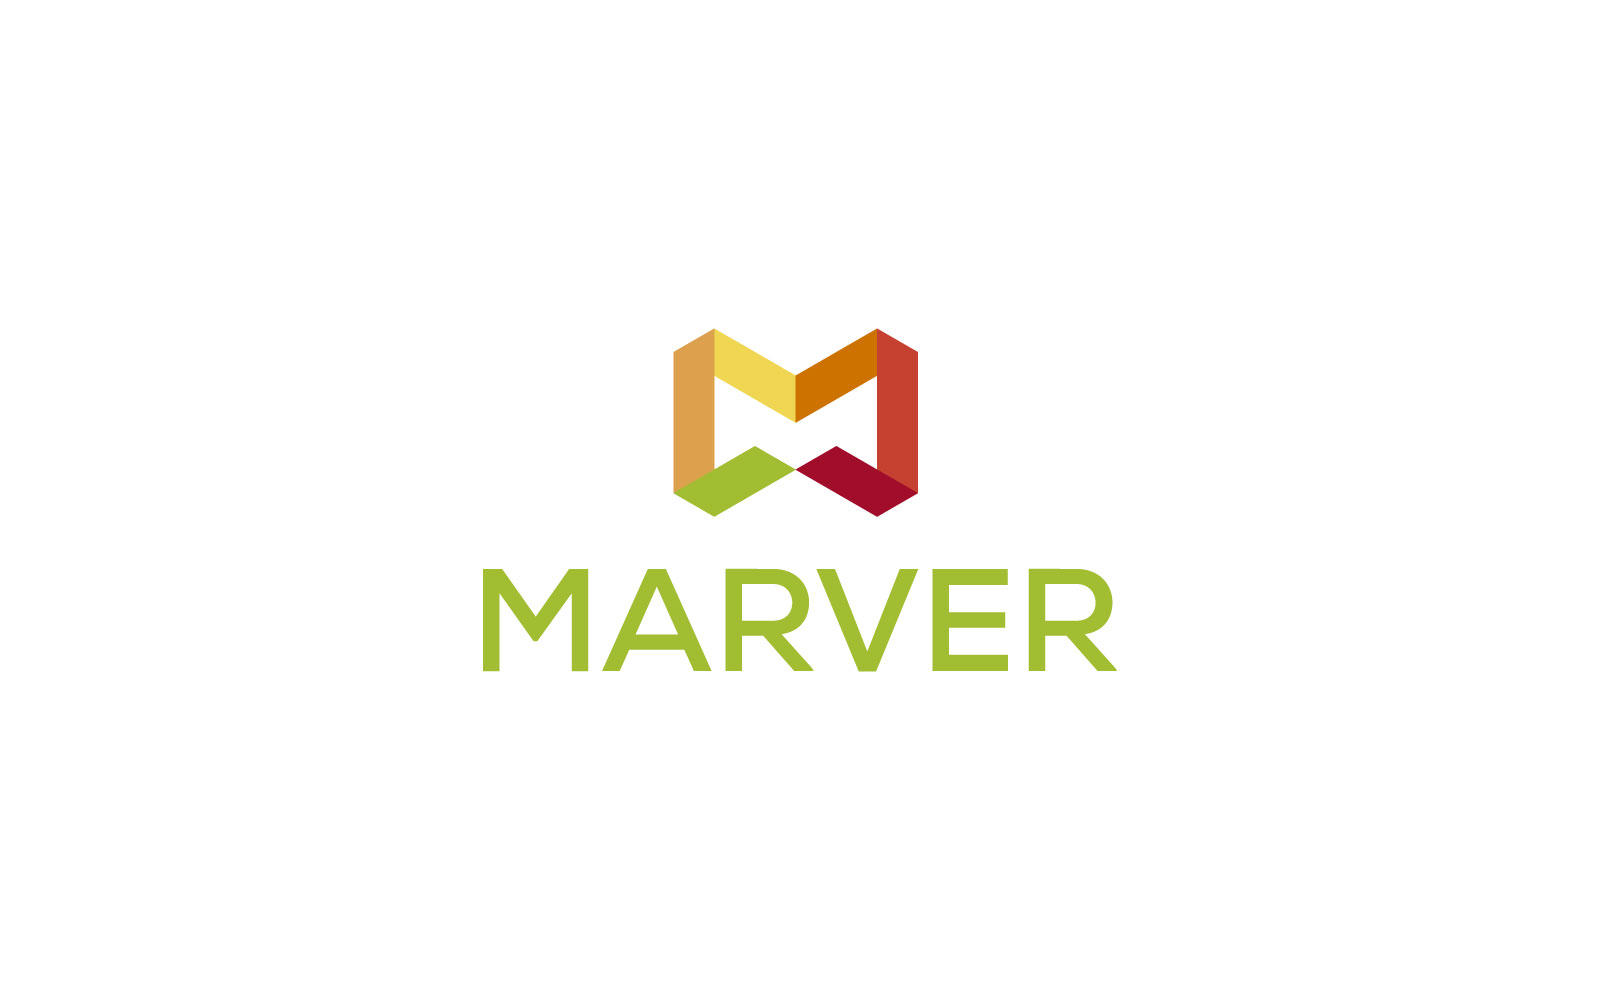 Marver M letter logo design template